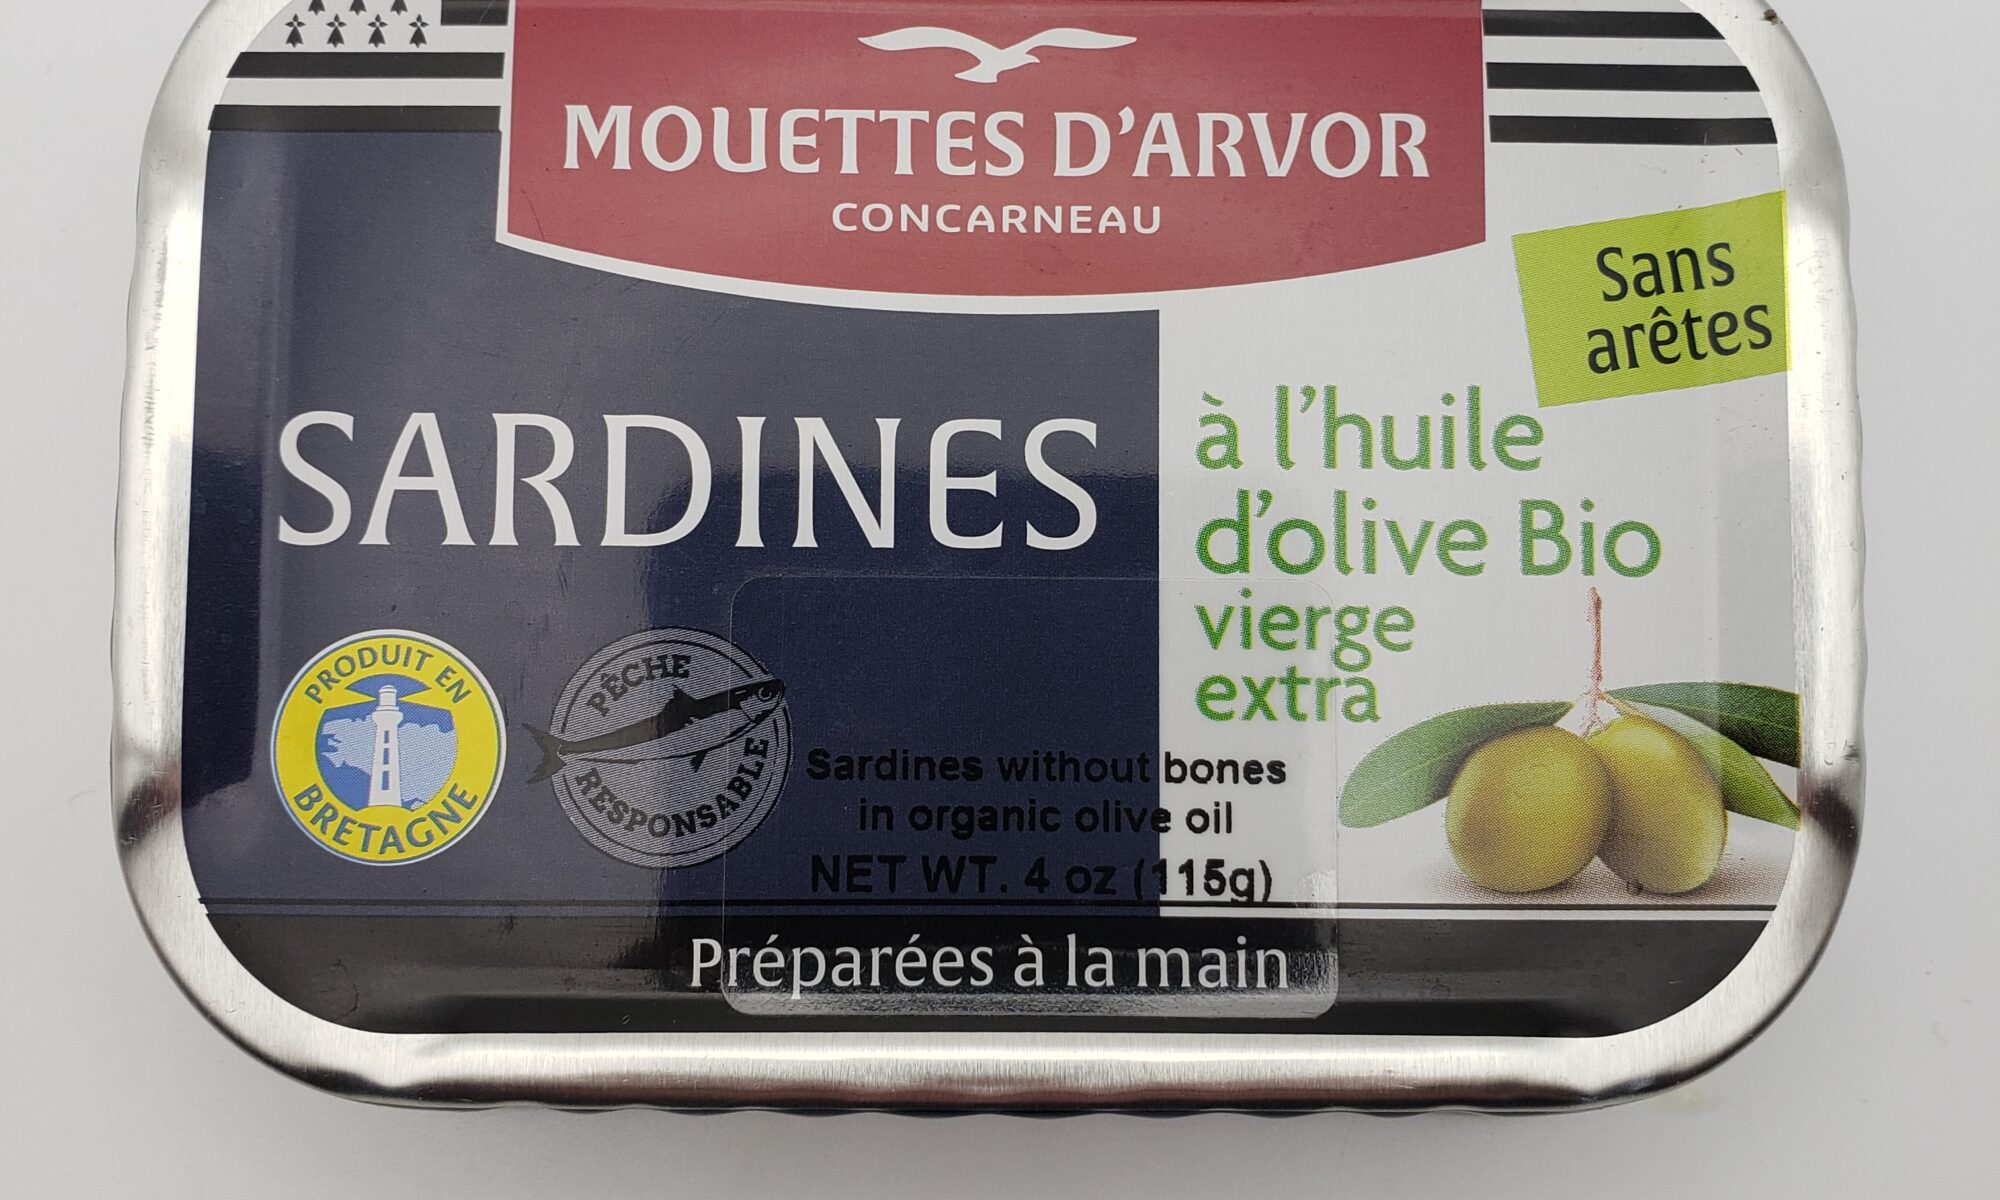 Image of Mouettes d'arvor boneless sardines